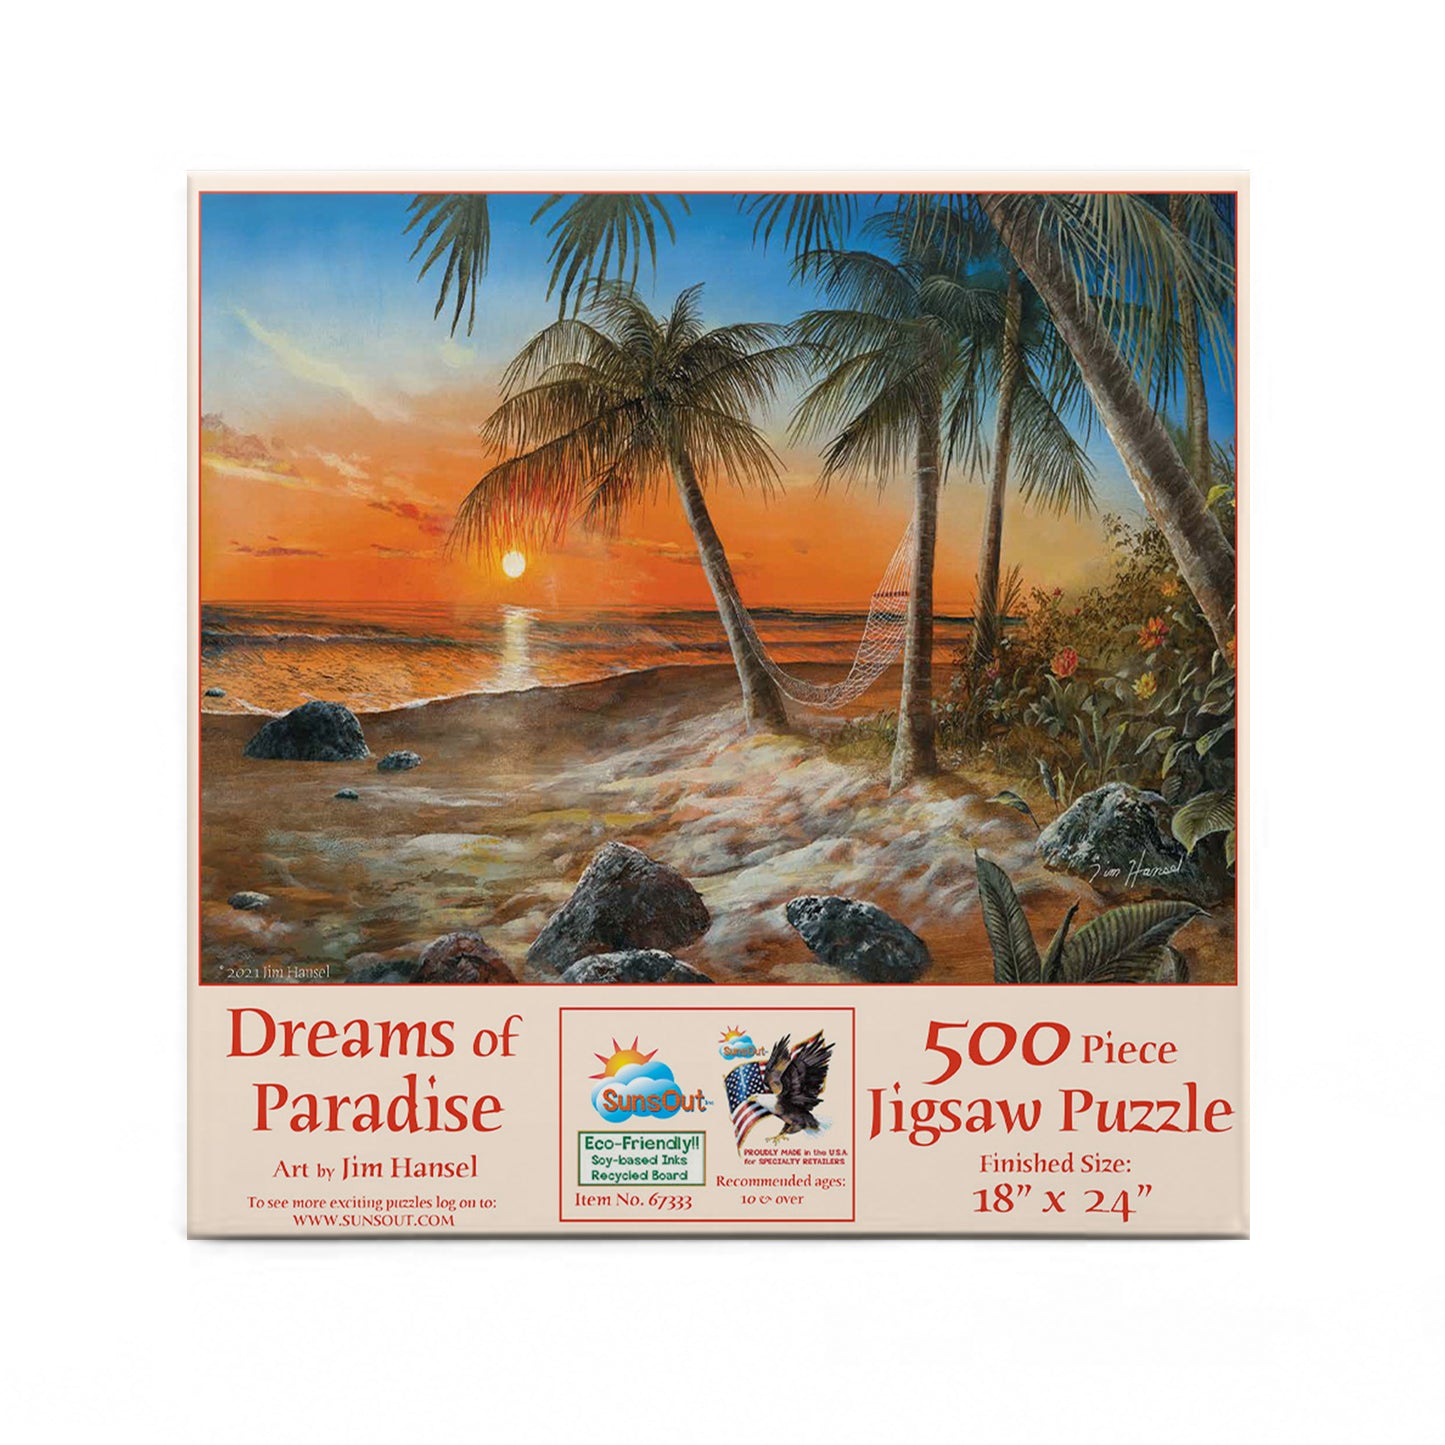 Dreams of Paradise - 500 Piece Jigsaw Puzzle